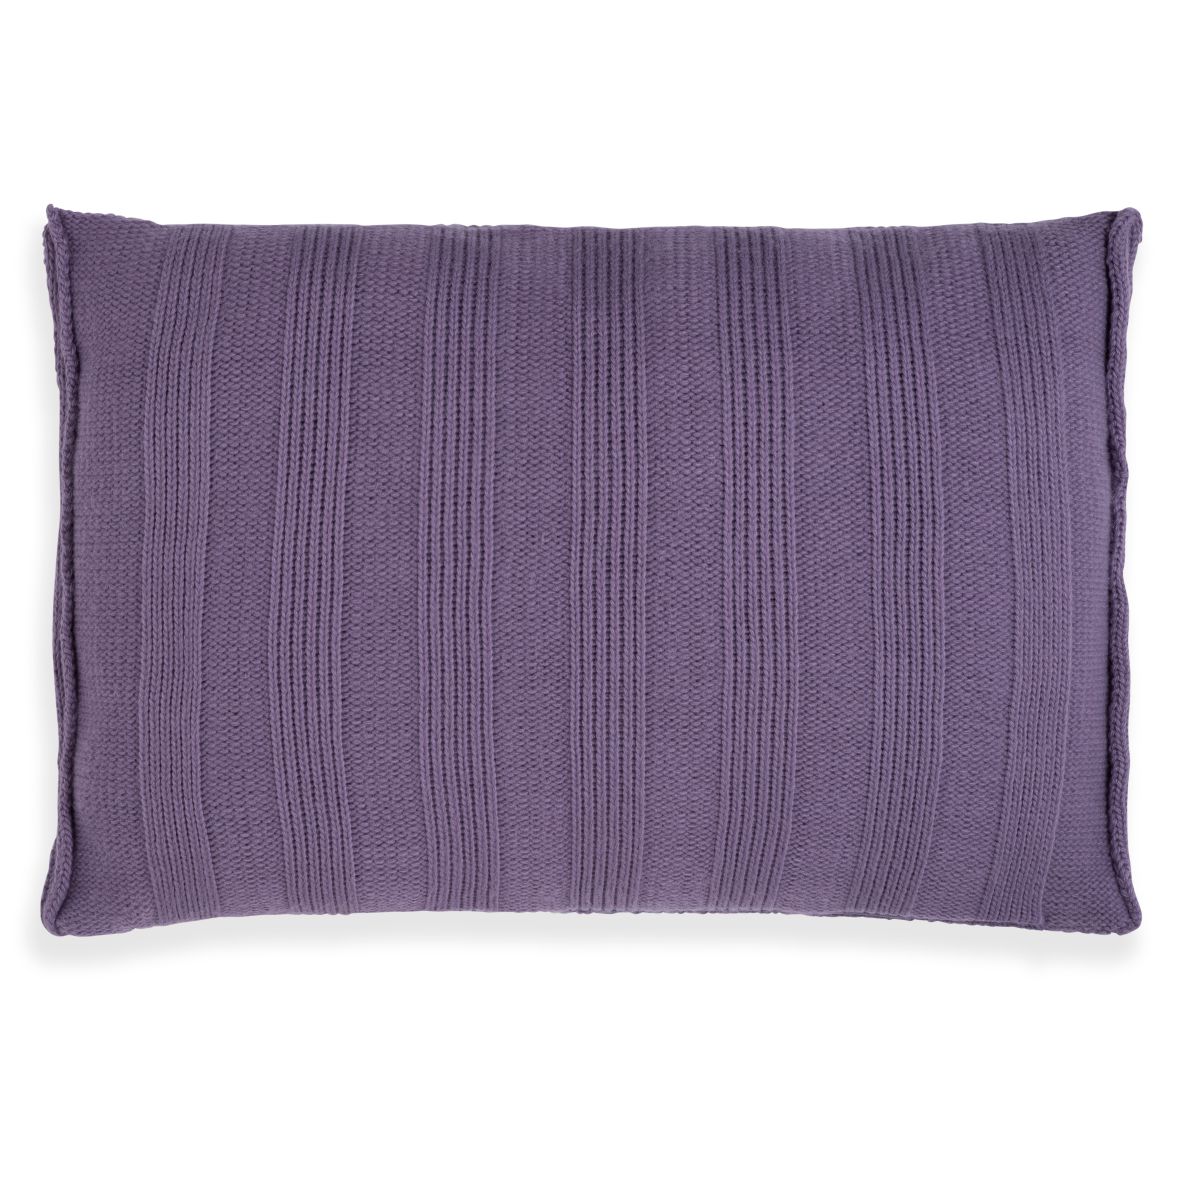 jesse cushion violet 60x40